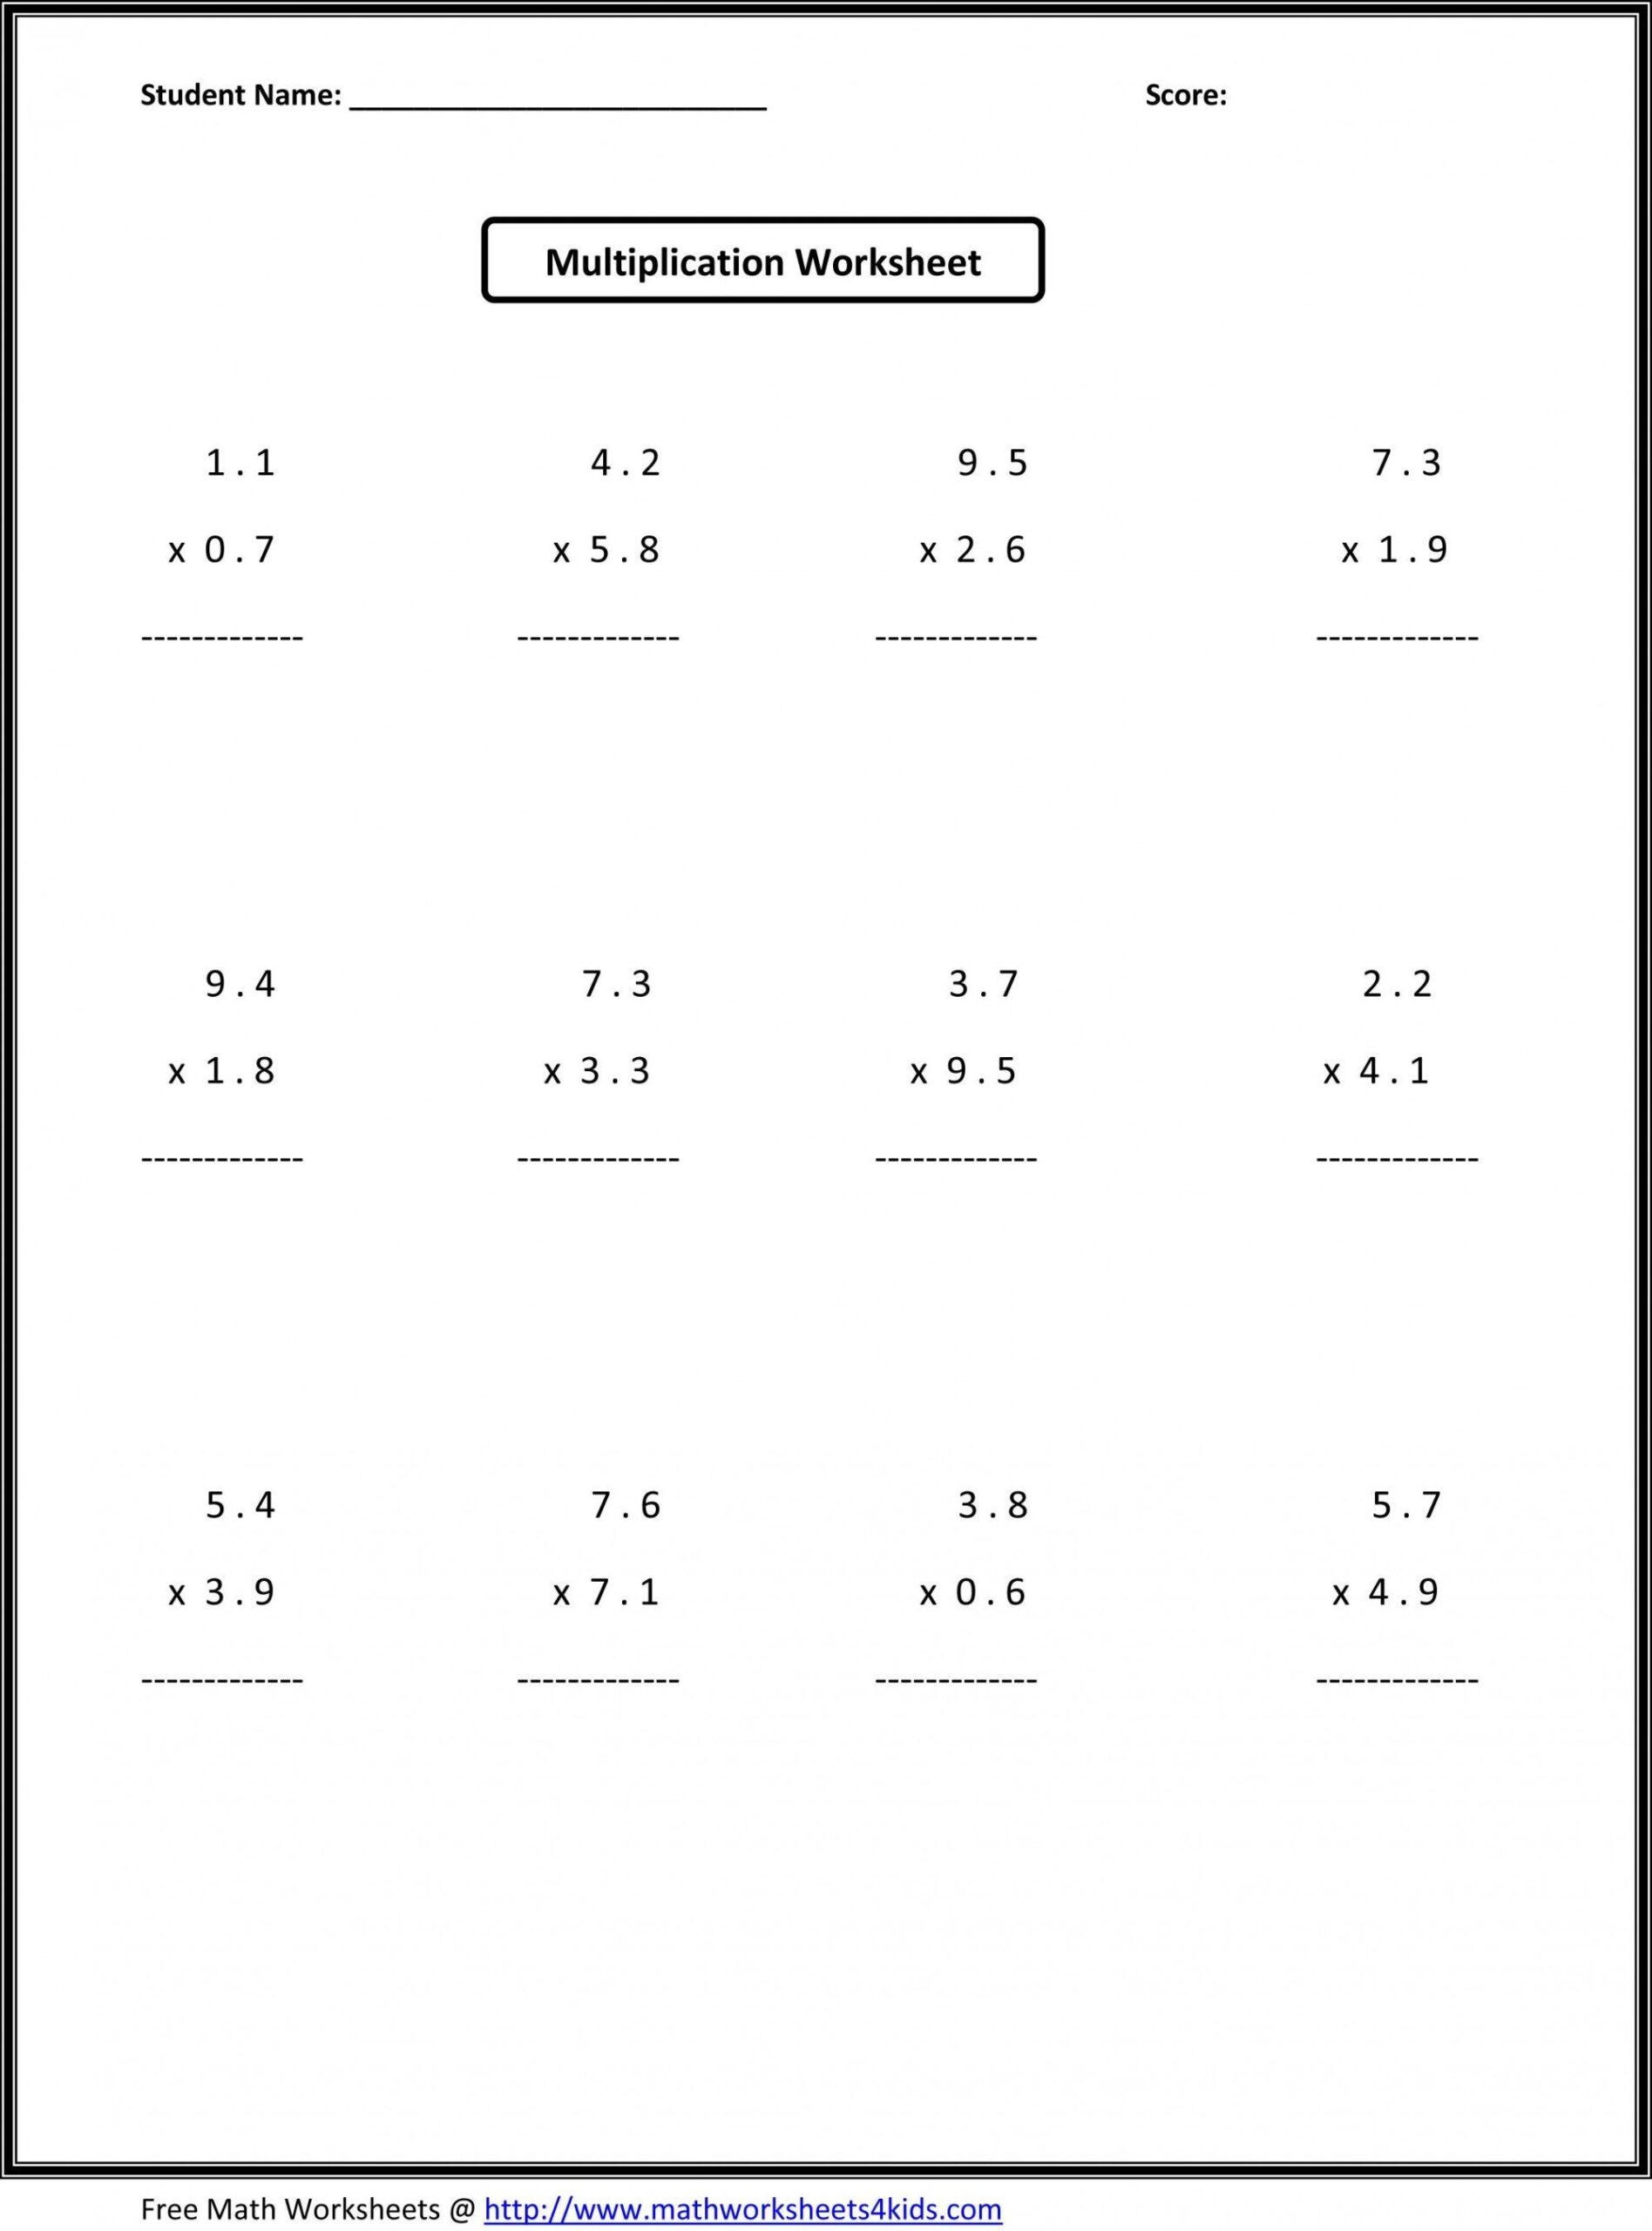 Multiplication Worksheets For 6th Graders